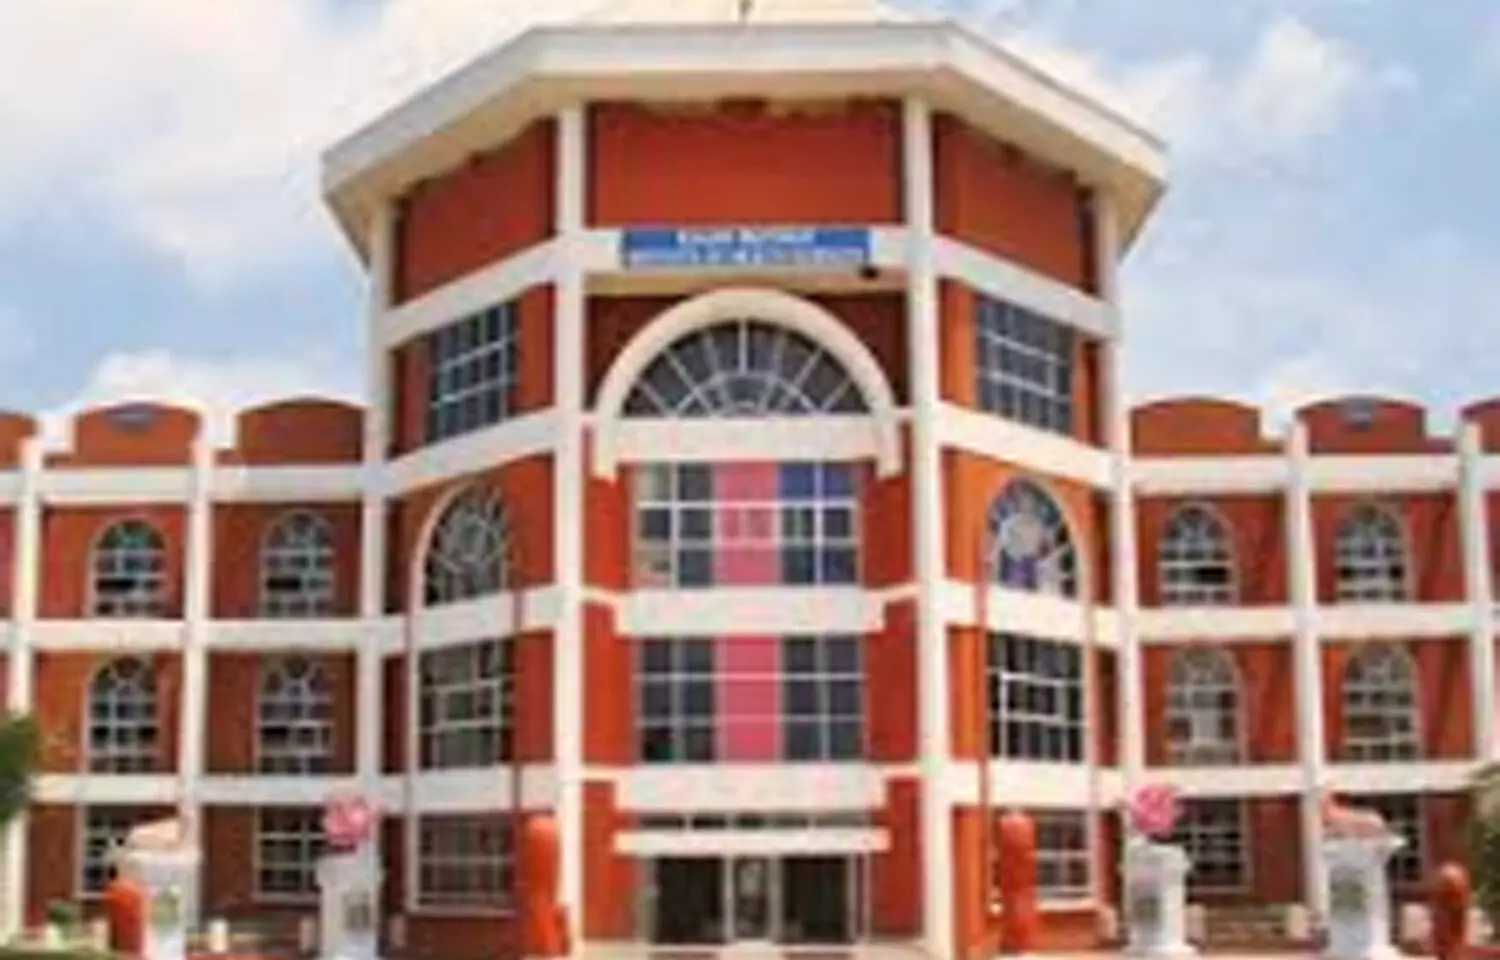 Tamil Nadu govt takes over Rajah Muthiah Medical College